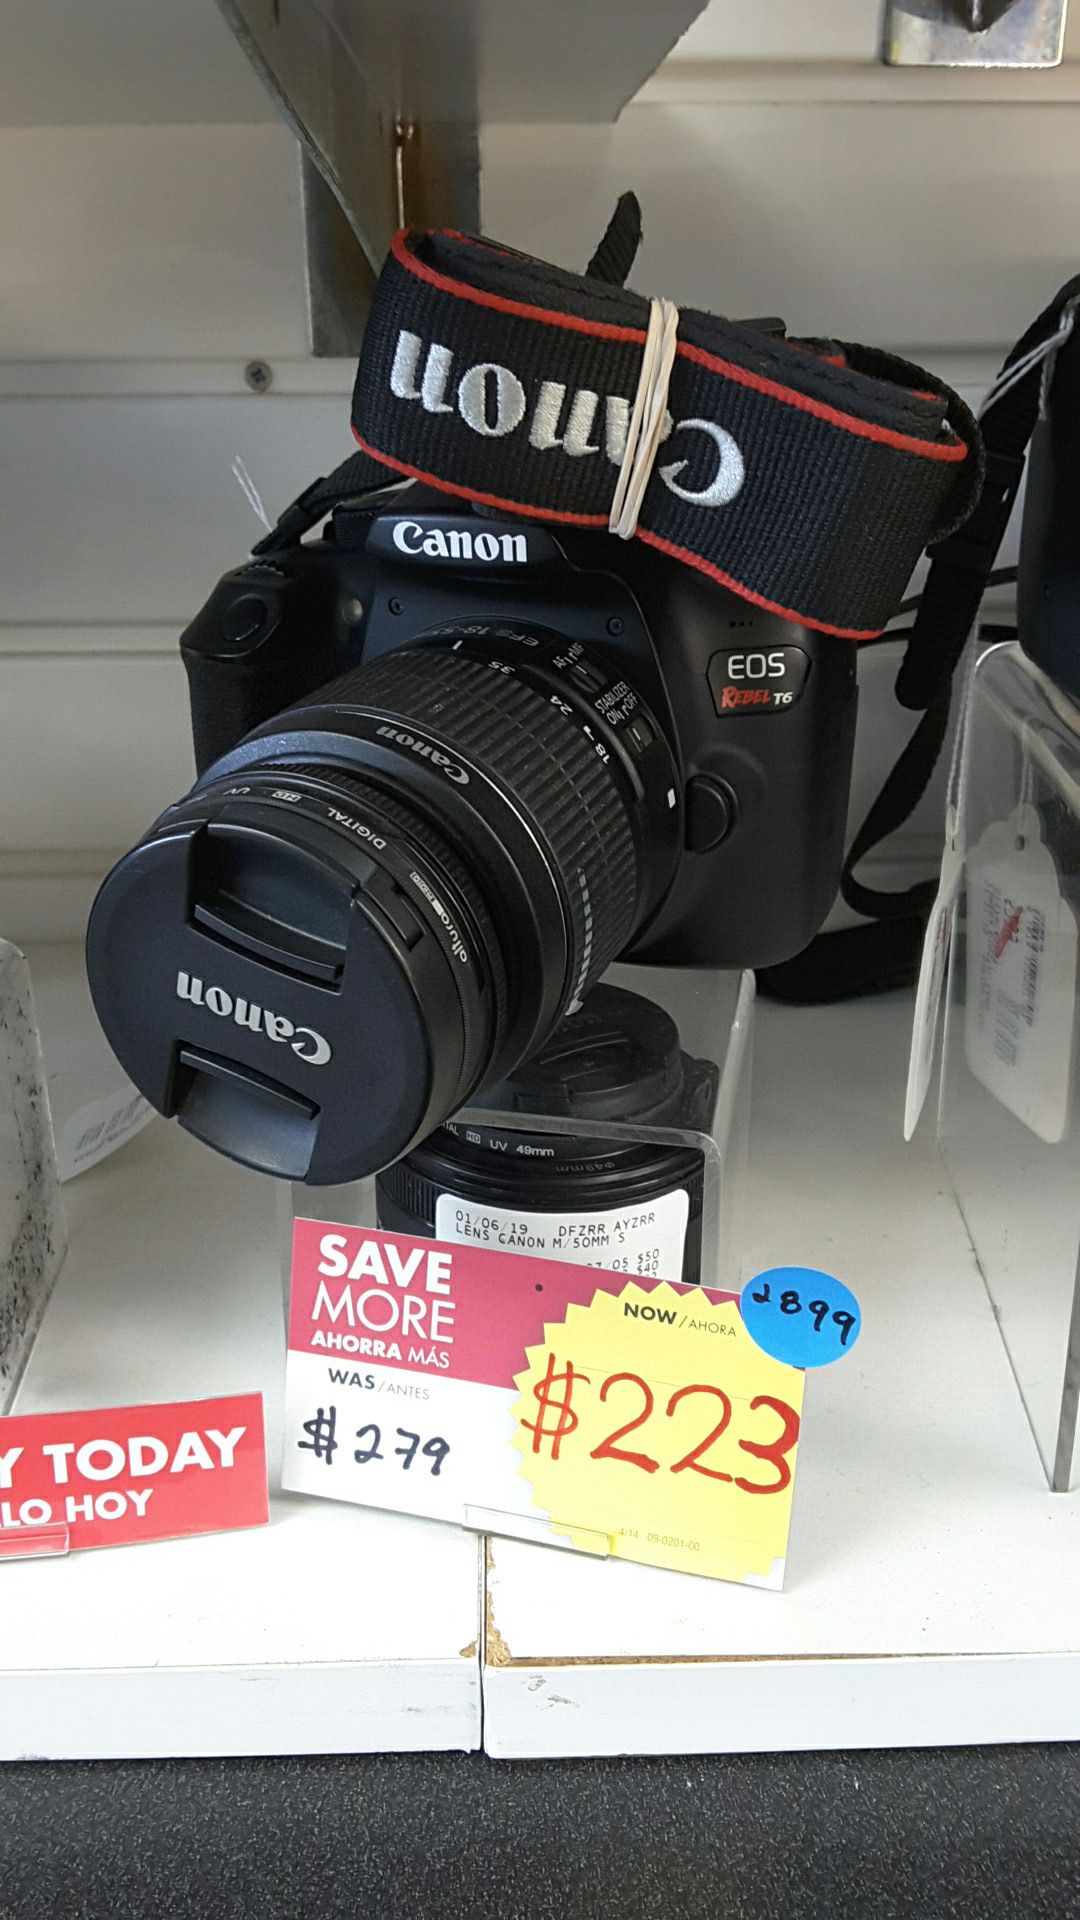 Camera Digital Canon with extra Lens